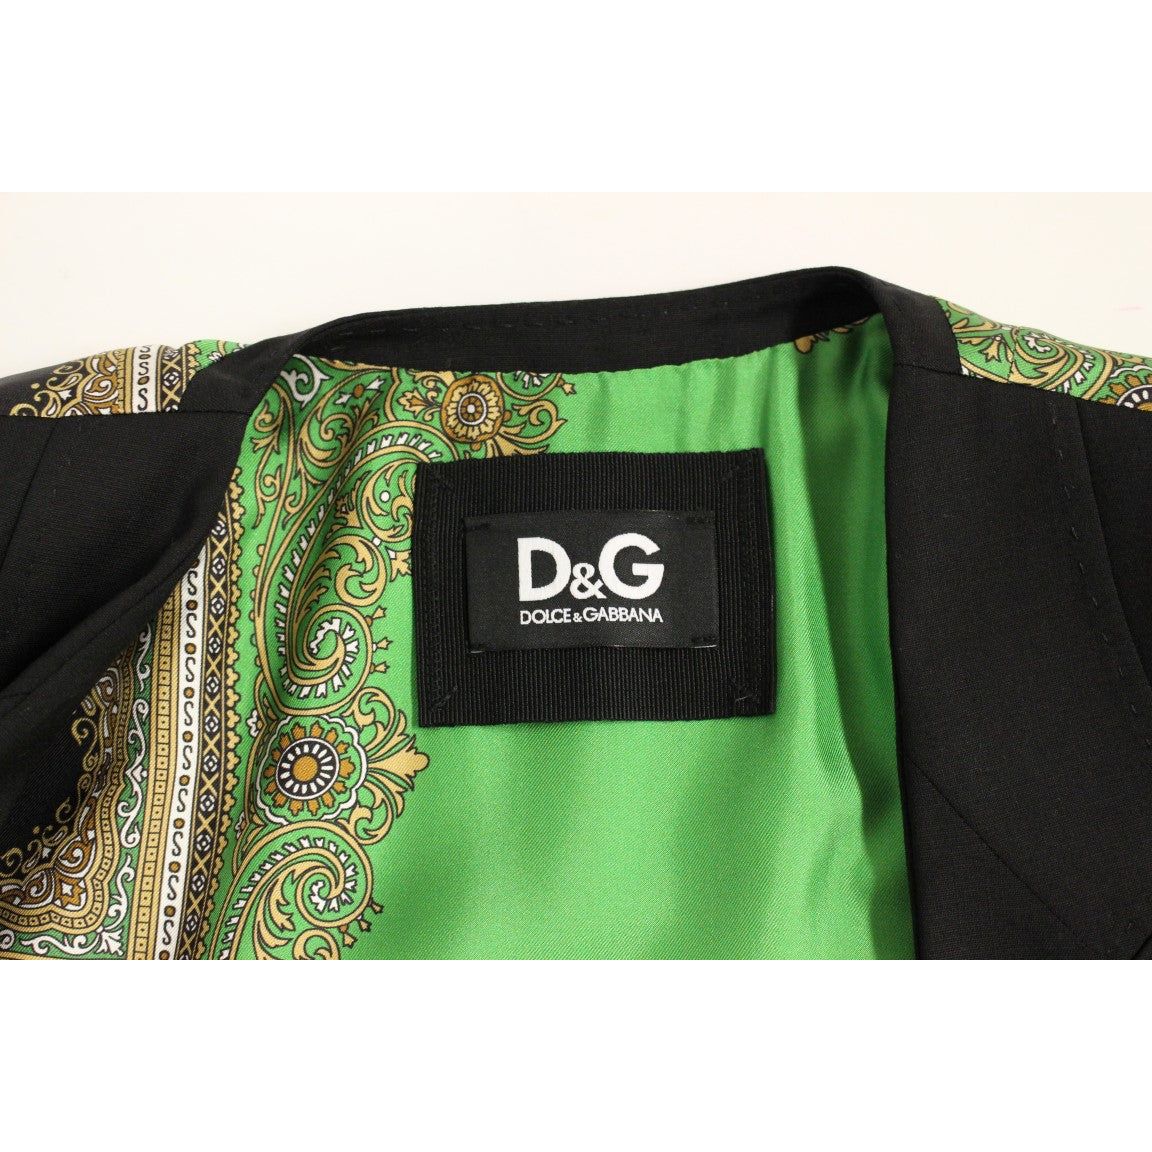 Dolce & Gabbana Elegant Silk-Blend Black Blazer with Scarf Back Detail Blazer jacket black-silk-scarf-back-blazer-jacket 217019-black-silk-scarf-back-blazer-jacket-7.jpg